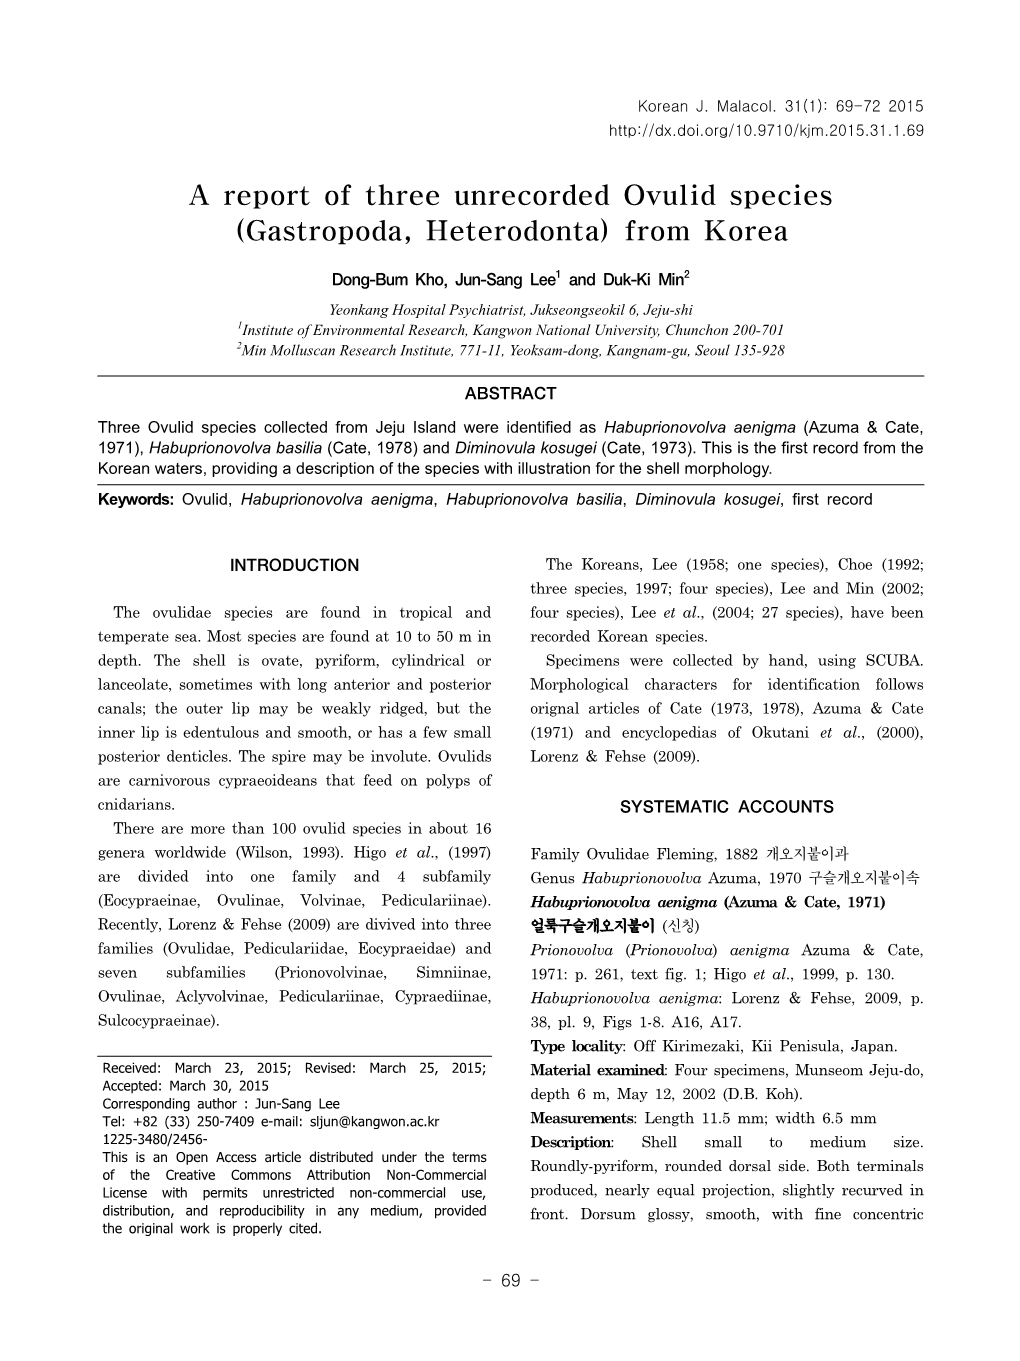 A Report of Three Unrecorded Ovulid Species (Gastropoda, Heterodonta) from Korea